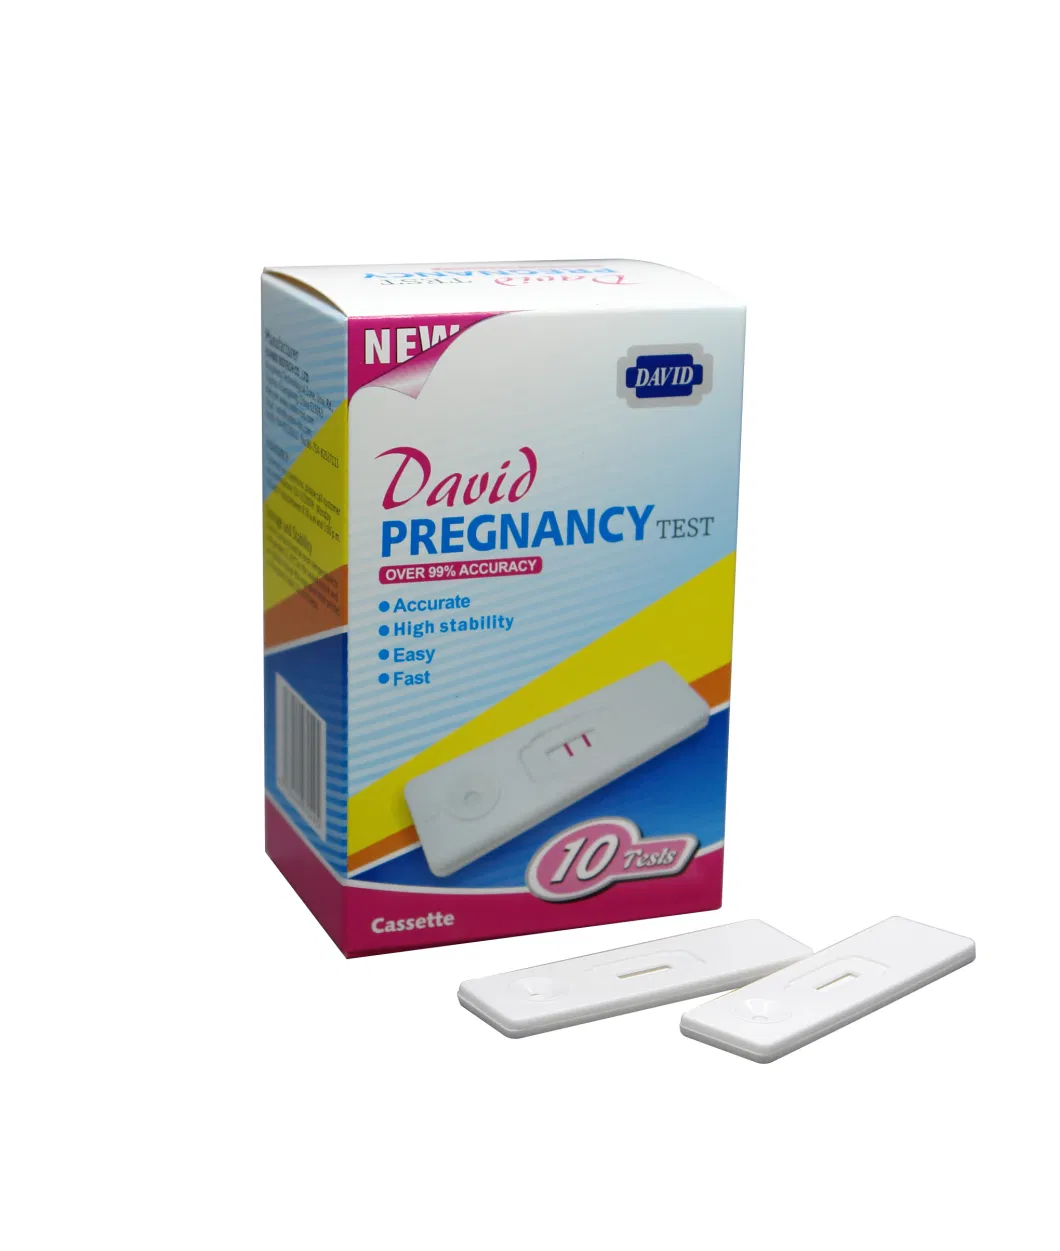 Ce Fda/510k Mdsap Approval David Oem Medical Supply David One Step Rapid Pregnancy Test